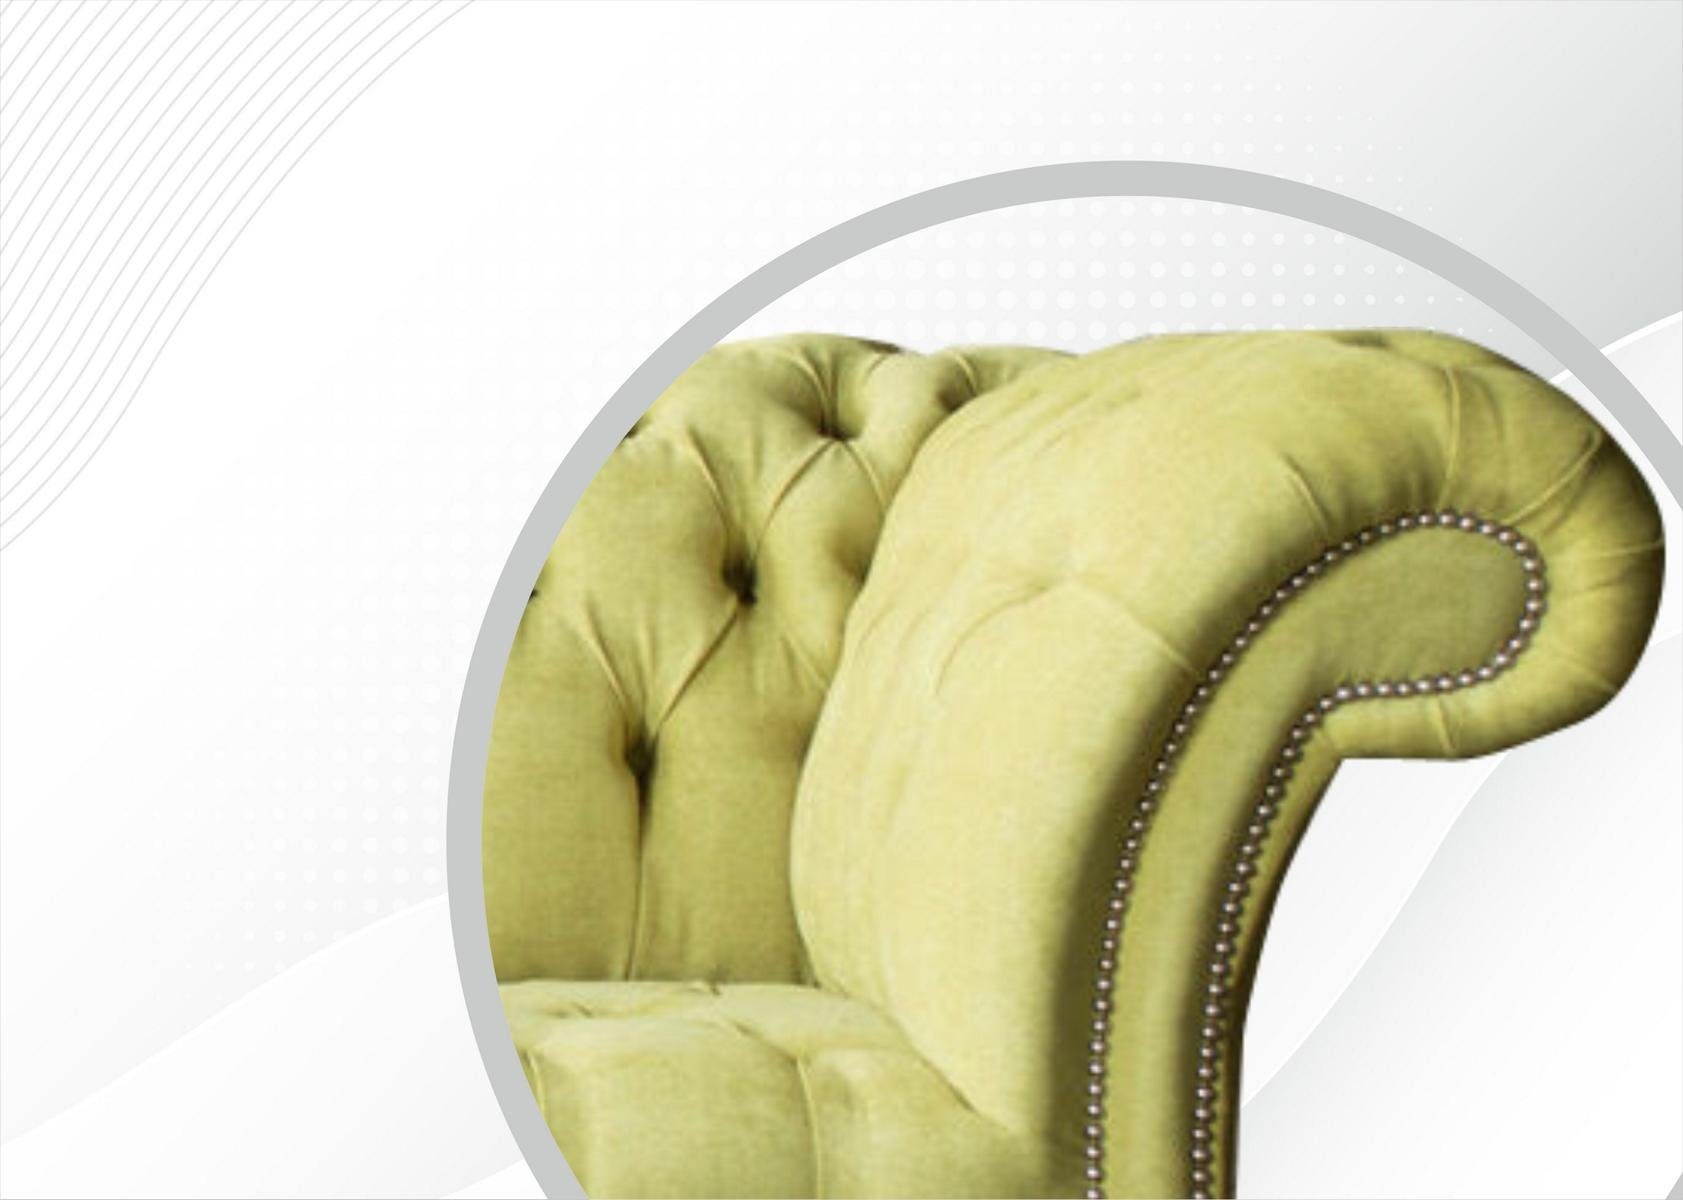 Chesterfield Design Wohnzimmer Chesterfield-Sofa, Polster Sofas JVmoebel Sofa 2Sitzer Couch